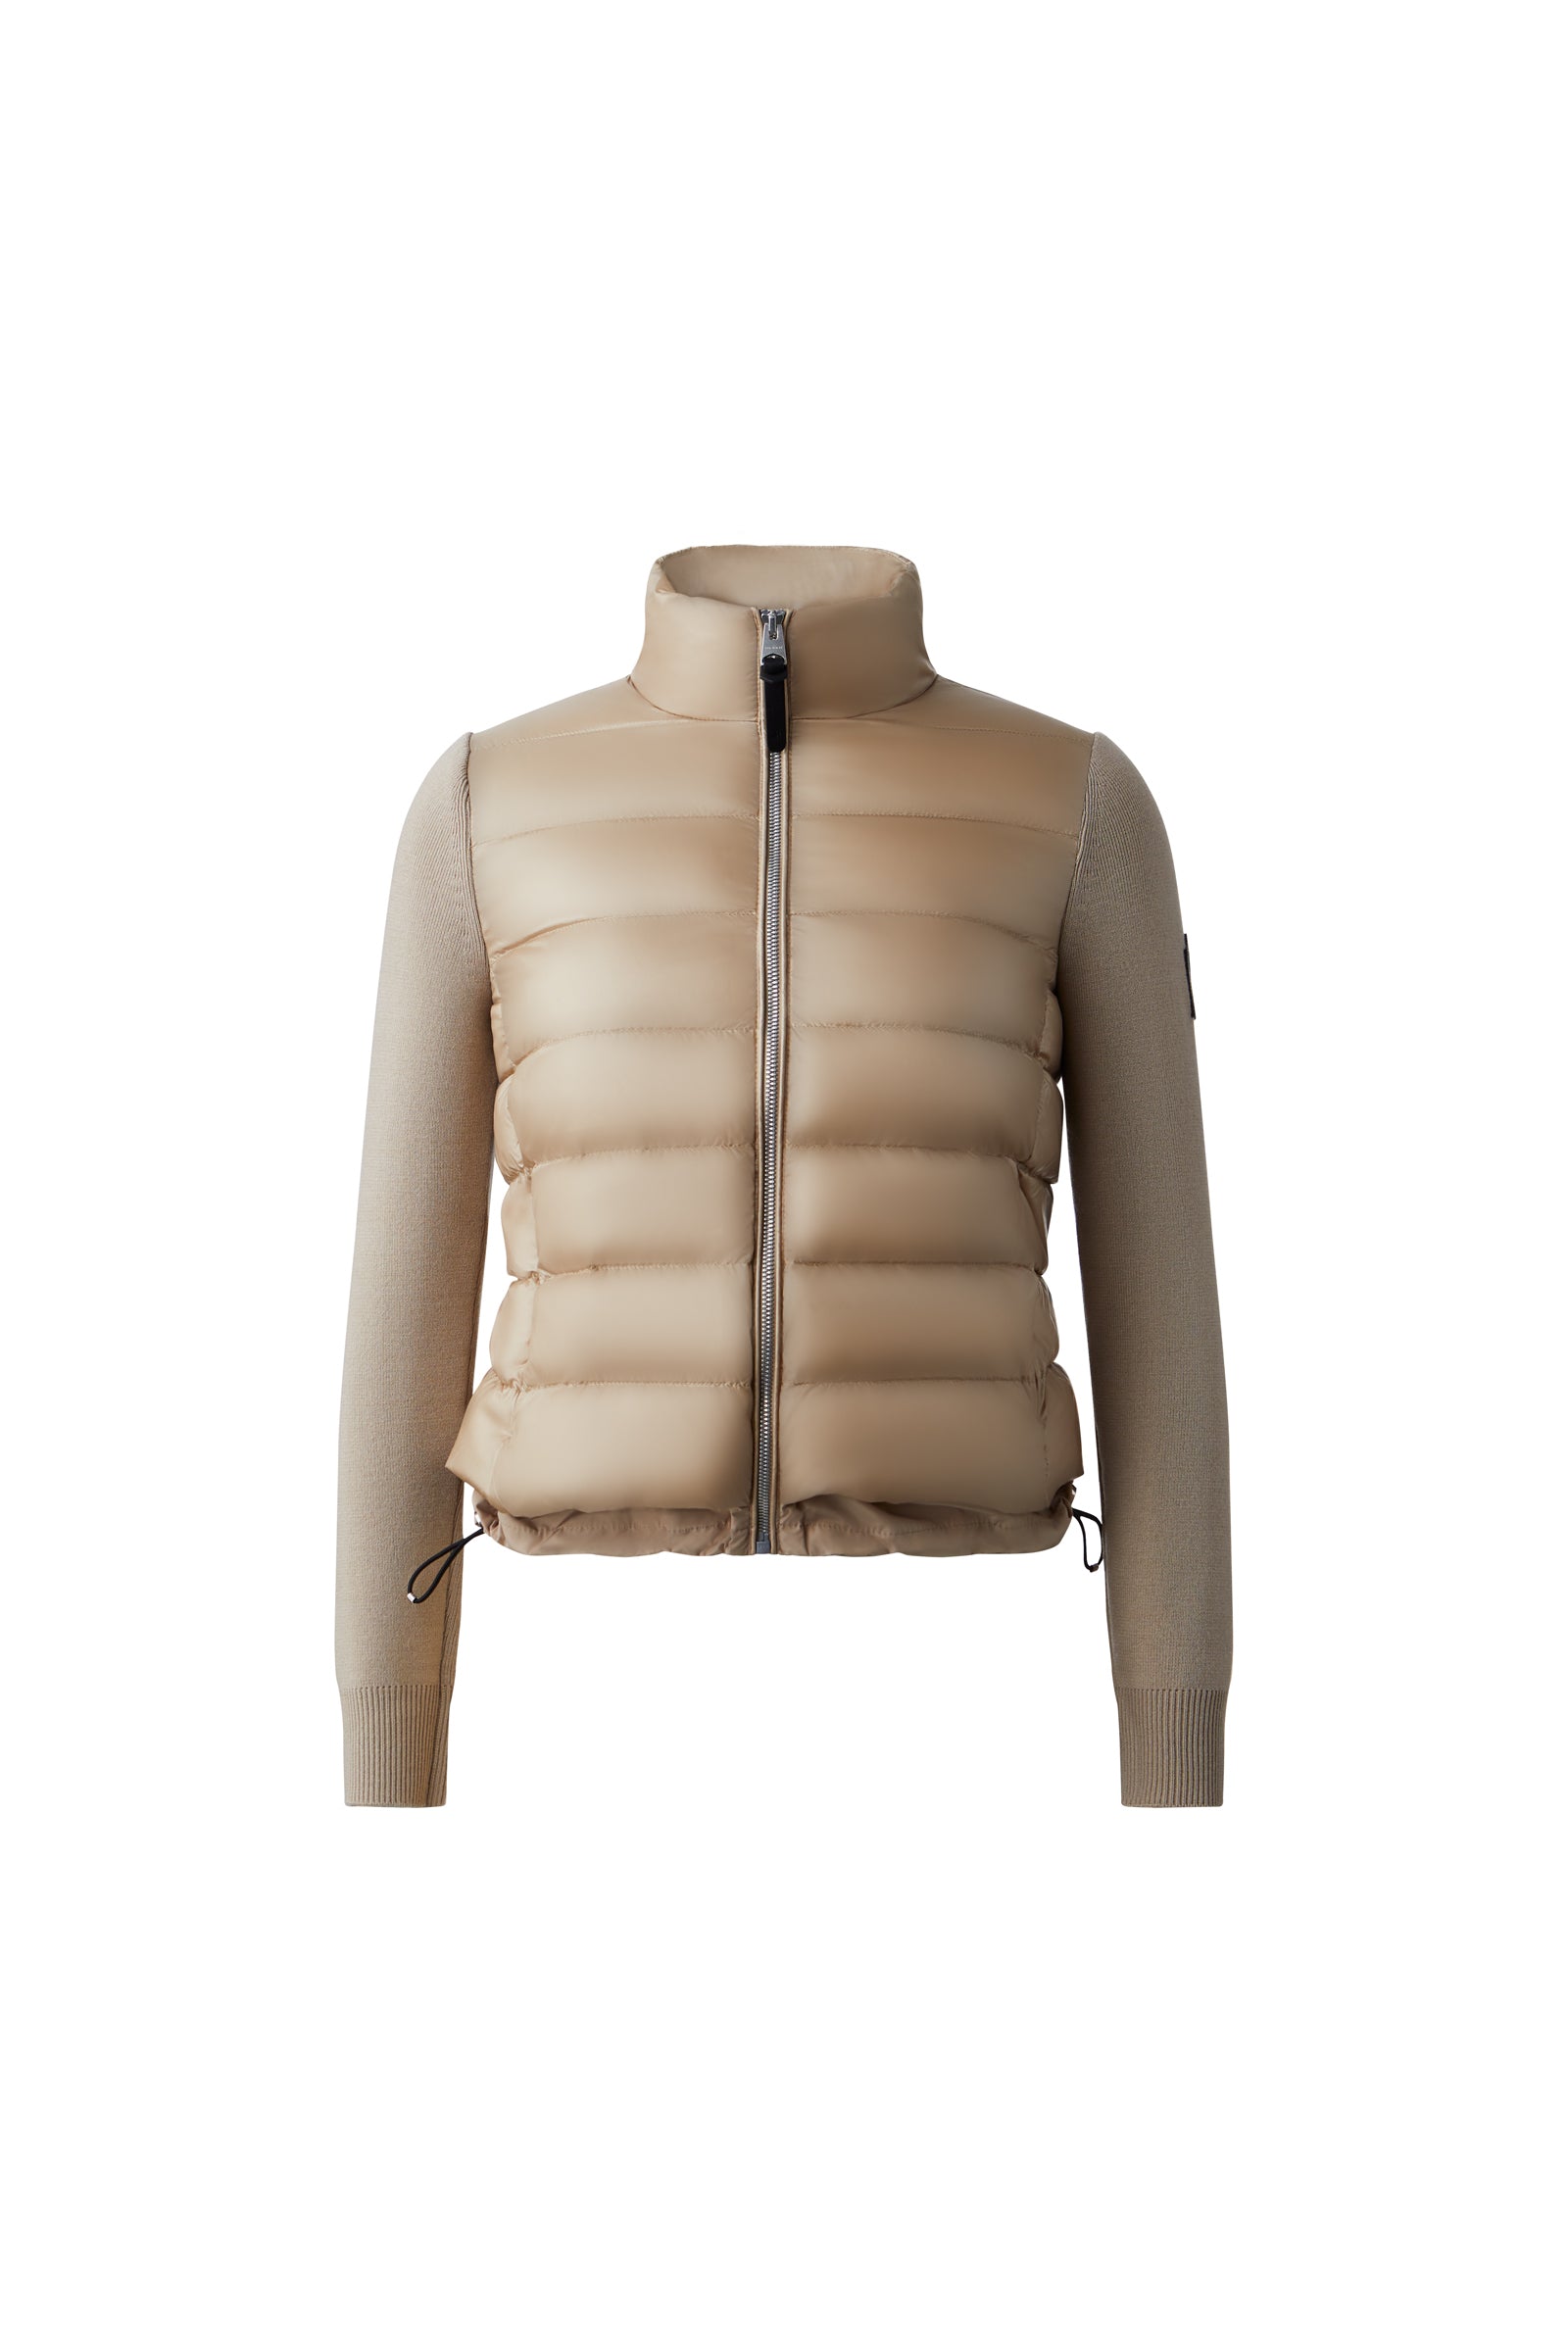 Mackage Oceane Recycled Hybrid Jacket With Rib Knit Sleeves Beige, Size: